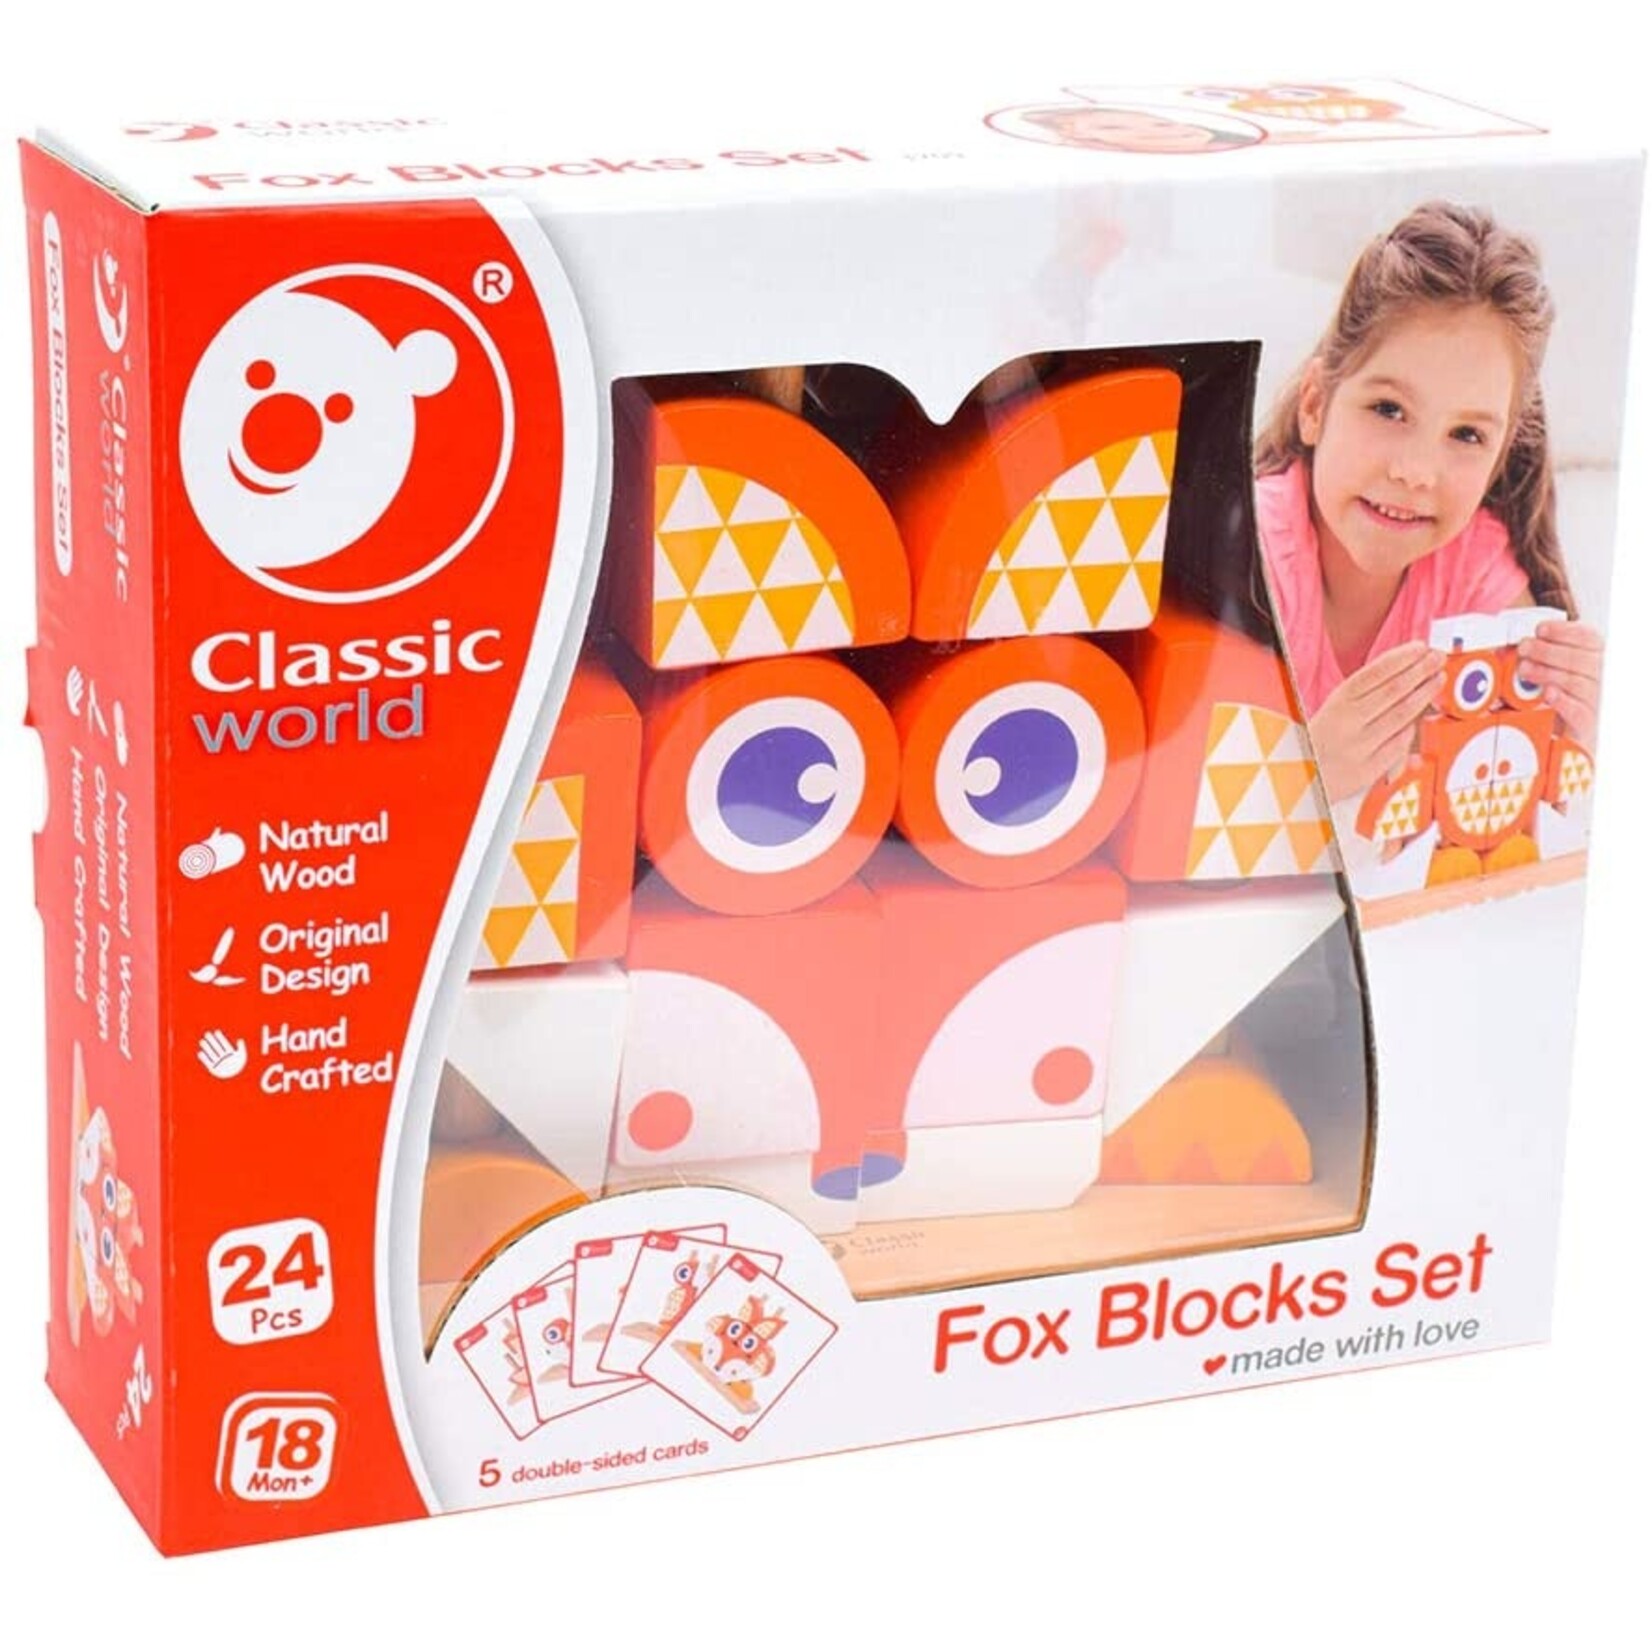 Fox Blocks Set